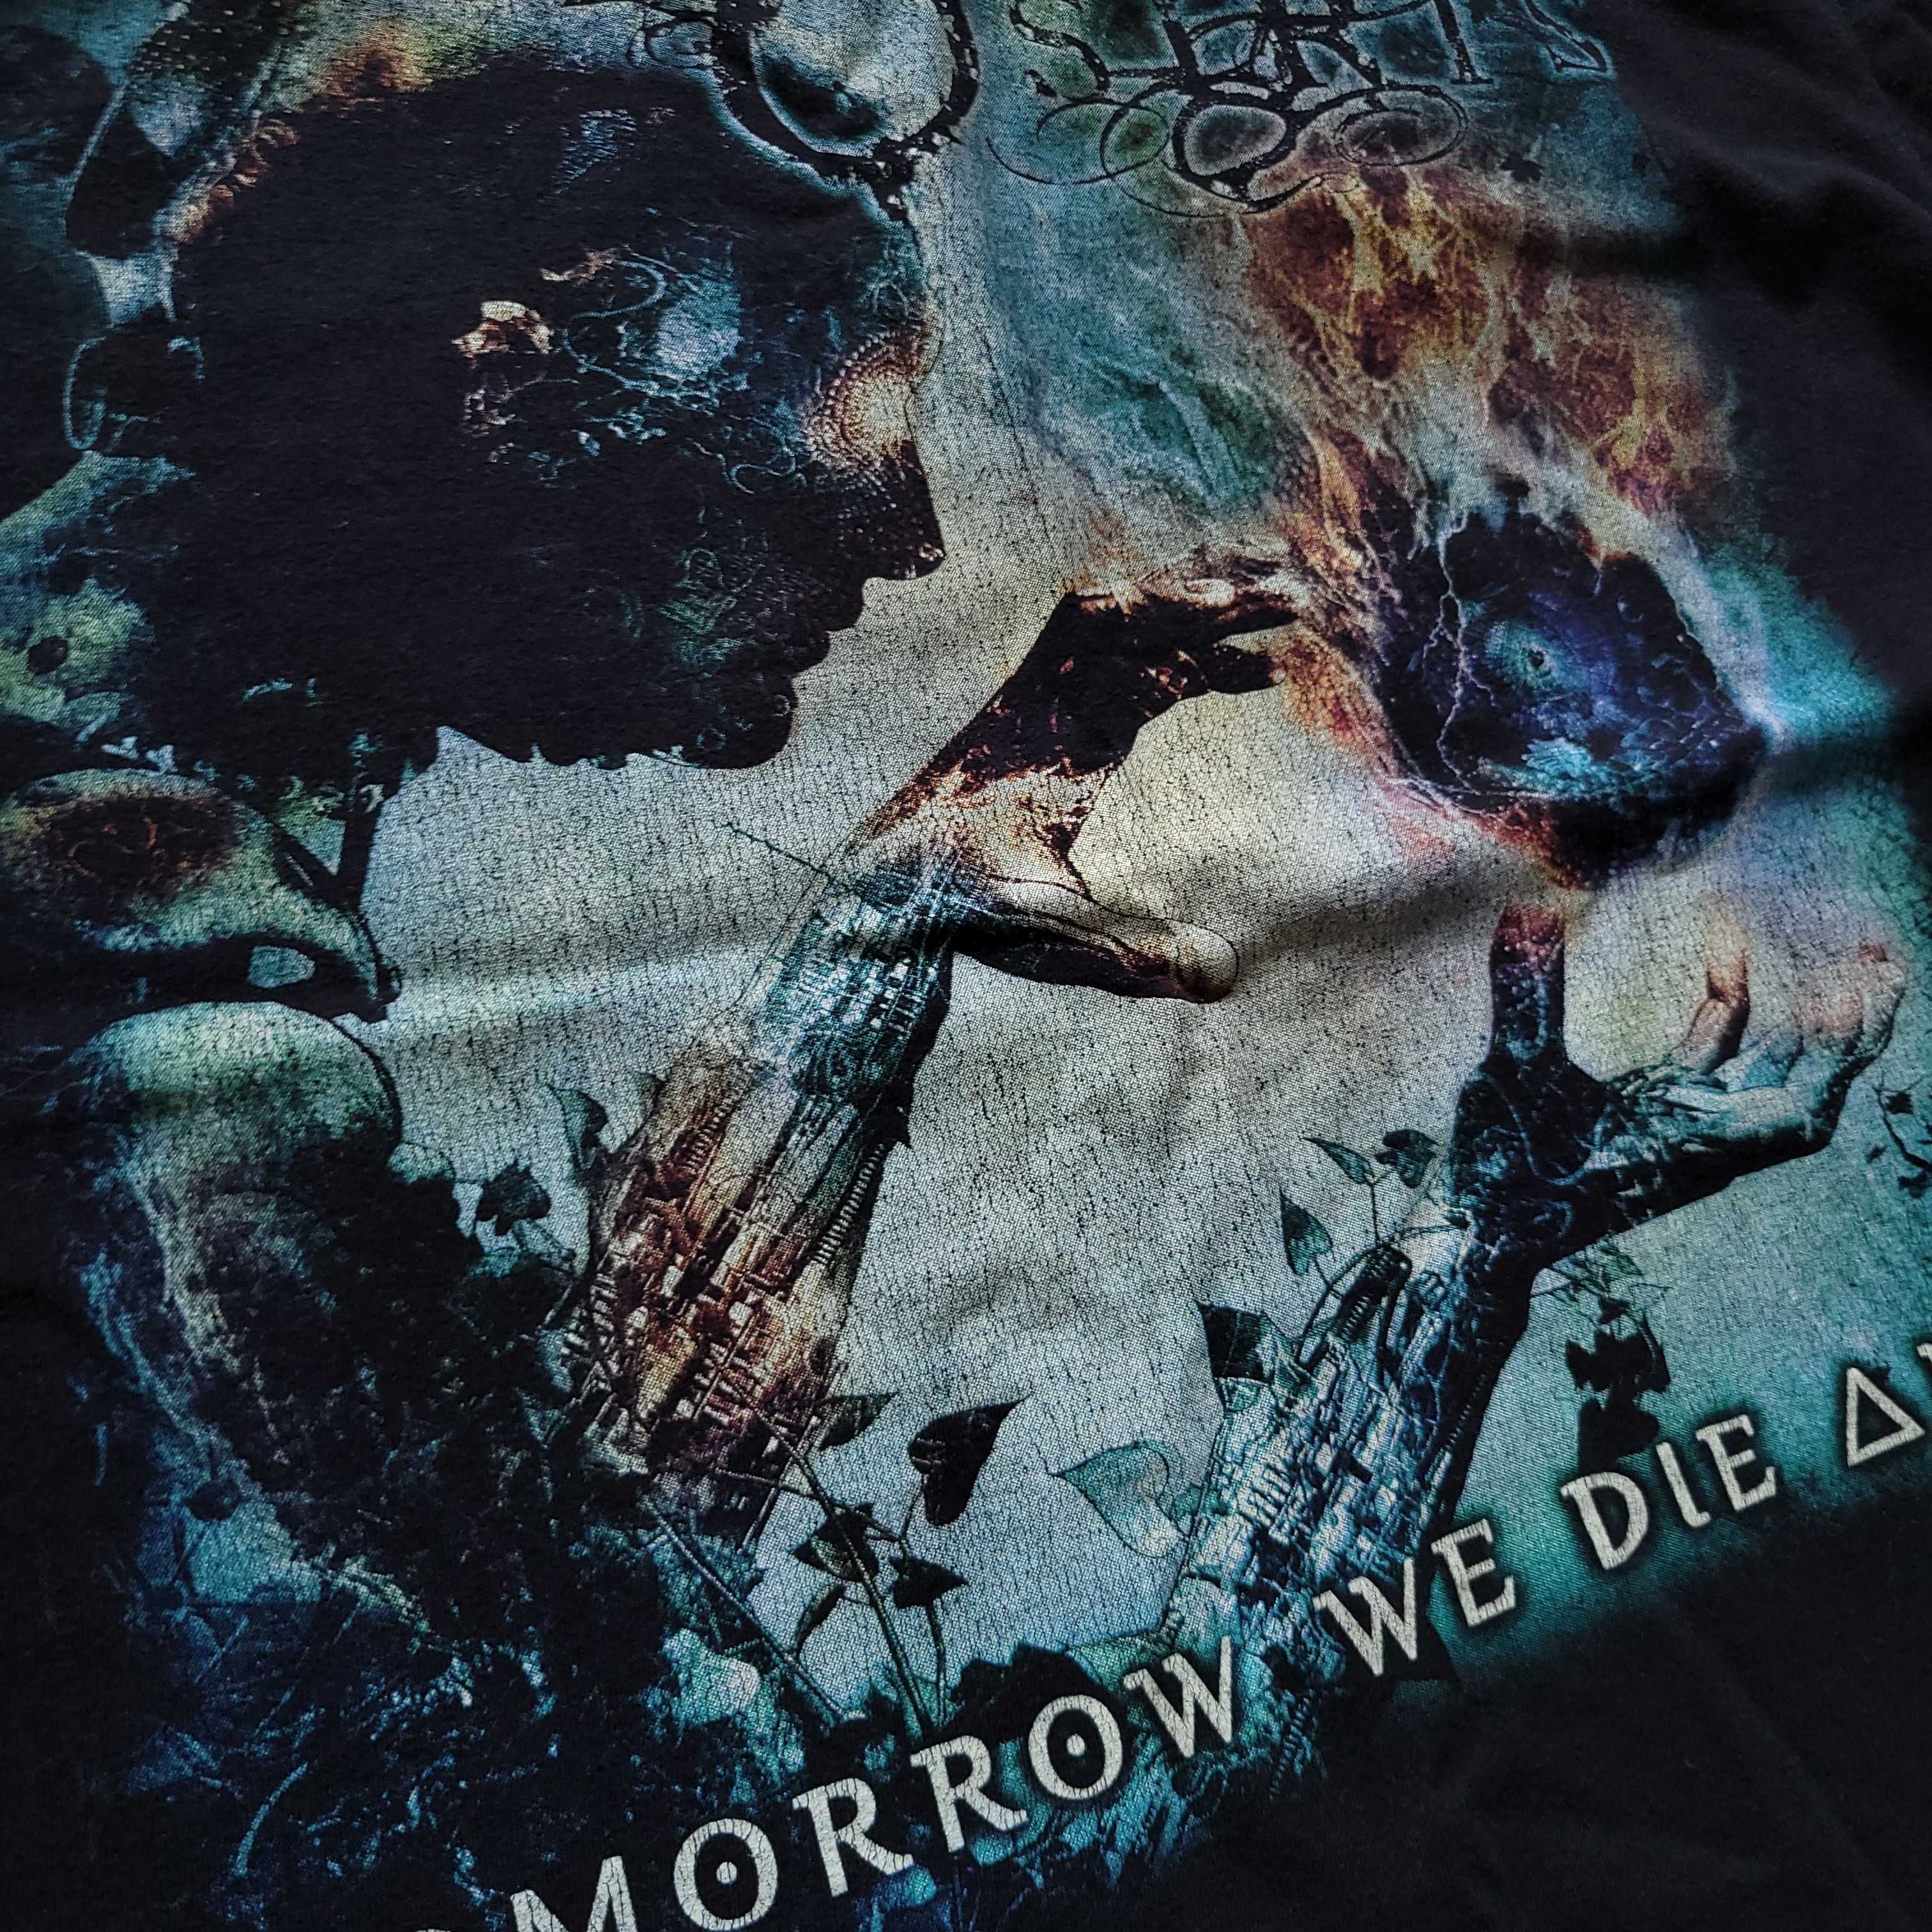 T-shirtt Born Of Osiris Tomorrow We Die Alive XL metalcore